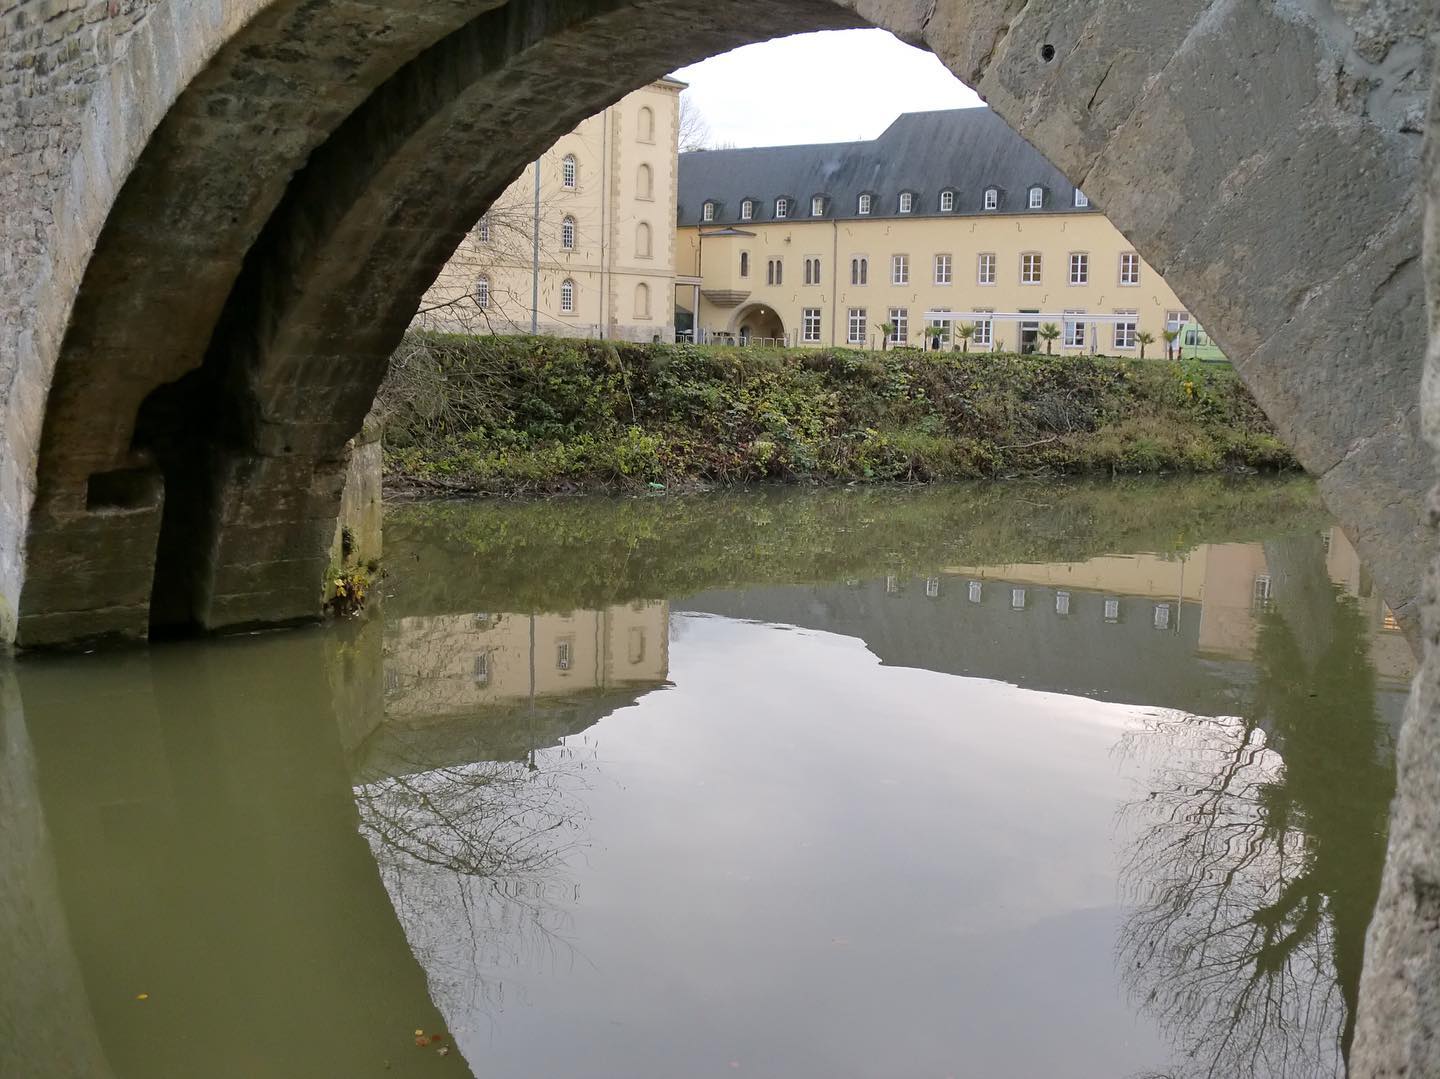 Under the bridge in Luxemburg City.
-
#luxembourg #luxembourgcity #europe #city #bridge #reflection  #travelblogger #travelphotography #view #travel @igluxembourg